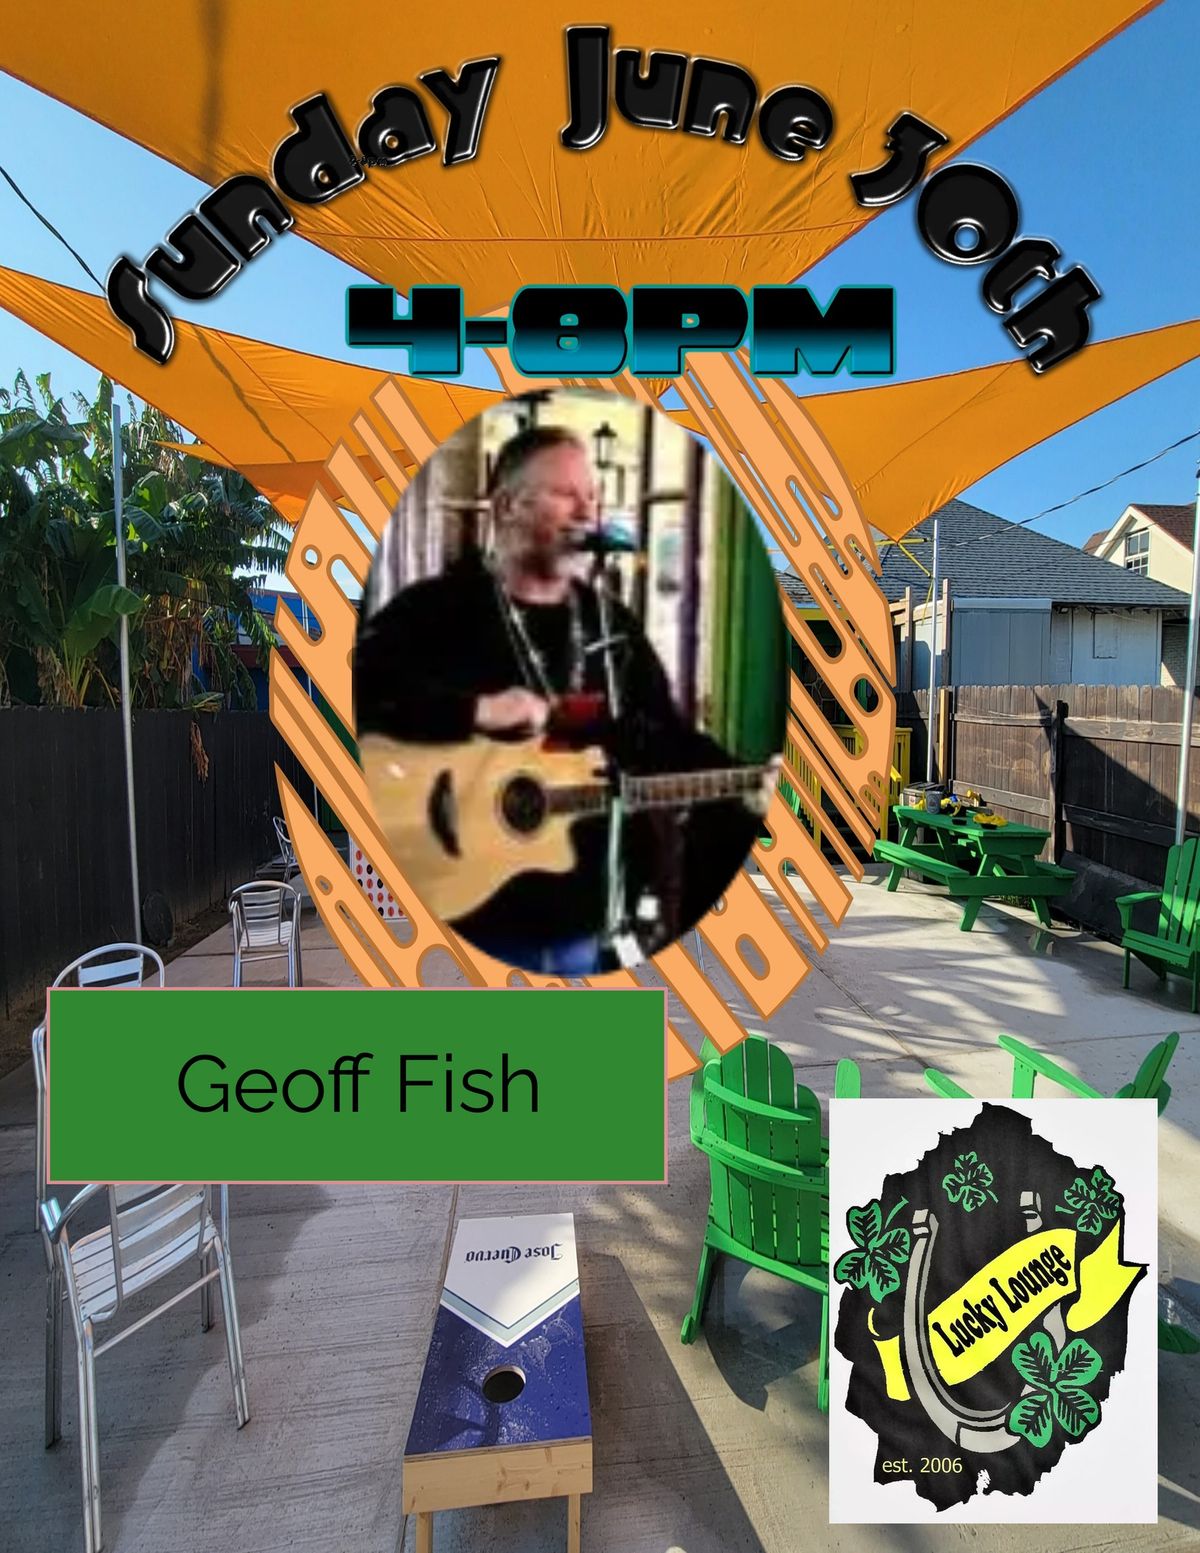 Geoff Fish on the Patio